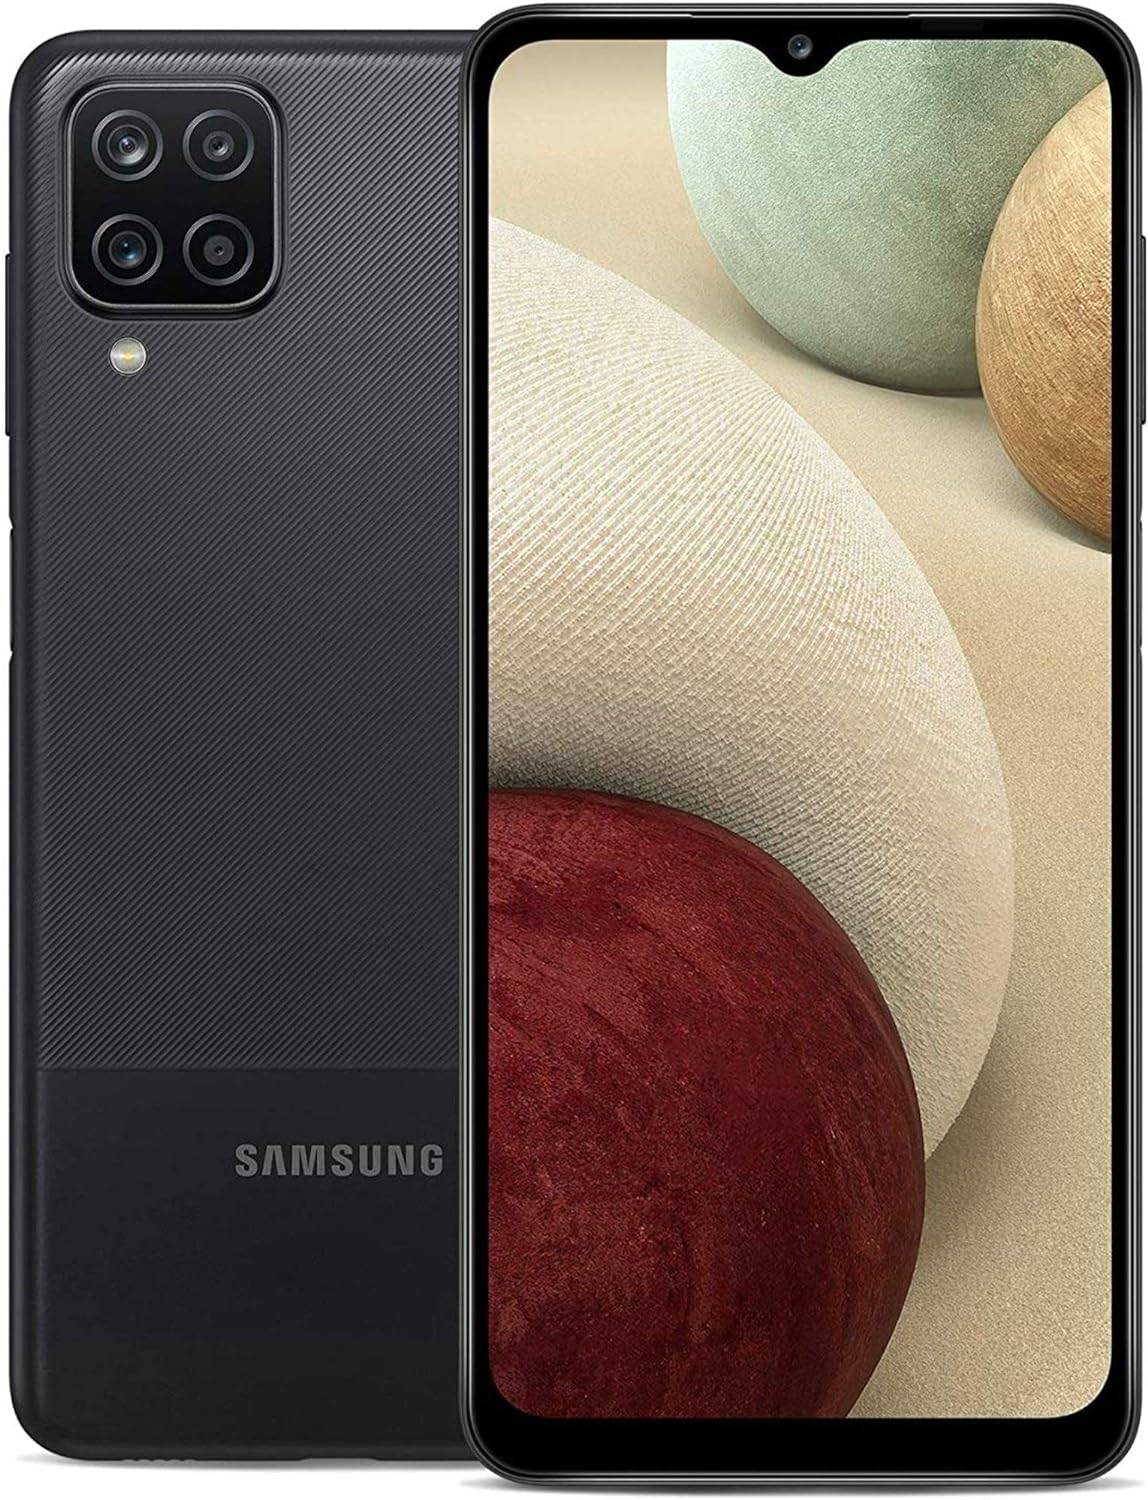 Samsung Galaxy A12 (32GB, 3GB) 6.5 HD+, Quad Camera, 5000mAh Battery, Global 4G Volte (ATT Unlocked for T-Mobile, Verizon, Metro) A125U (Black) (Renewed)